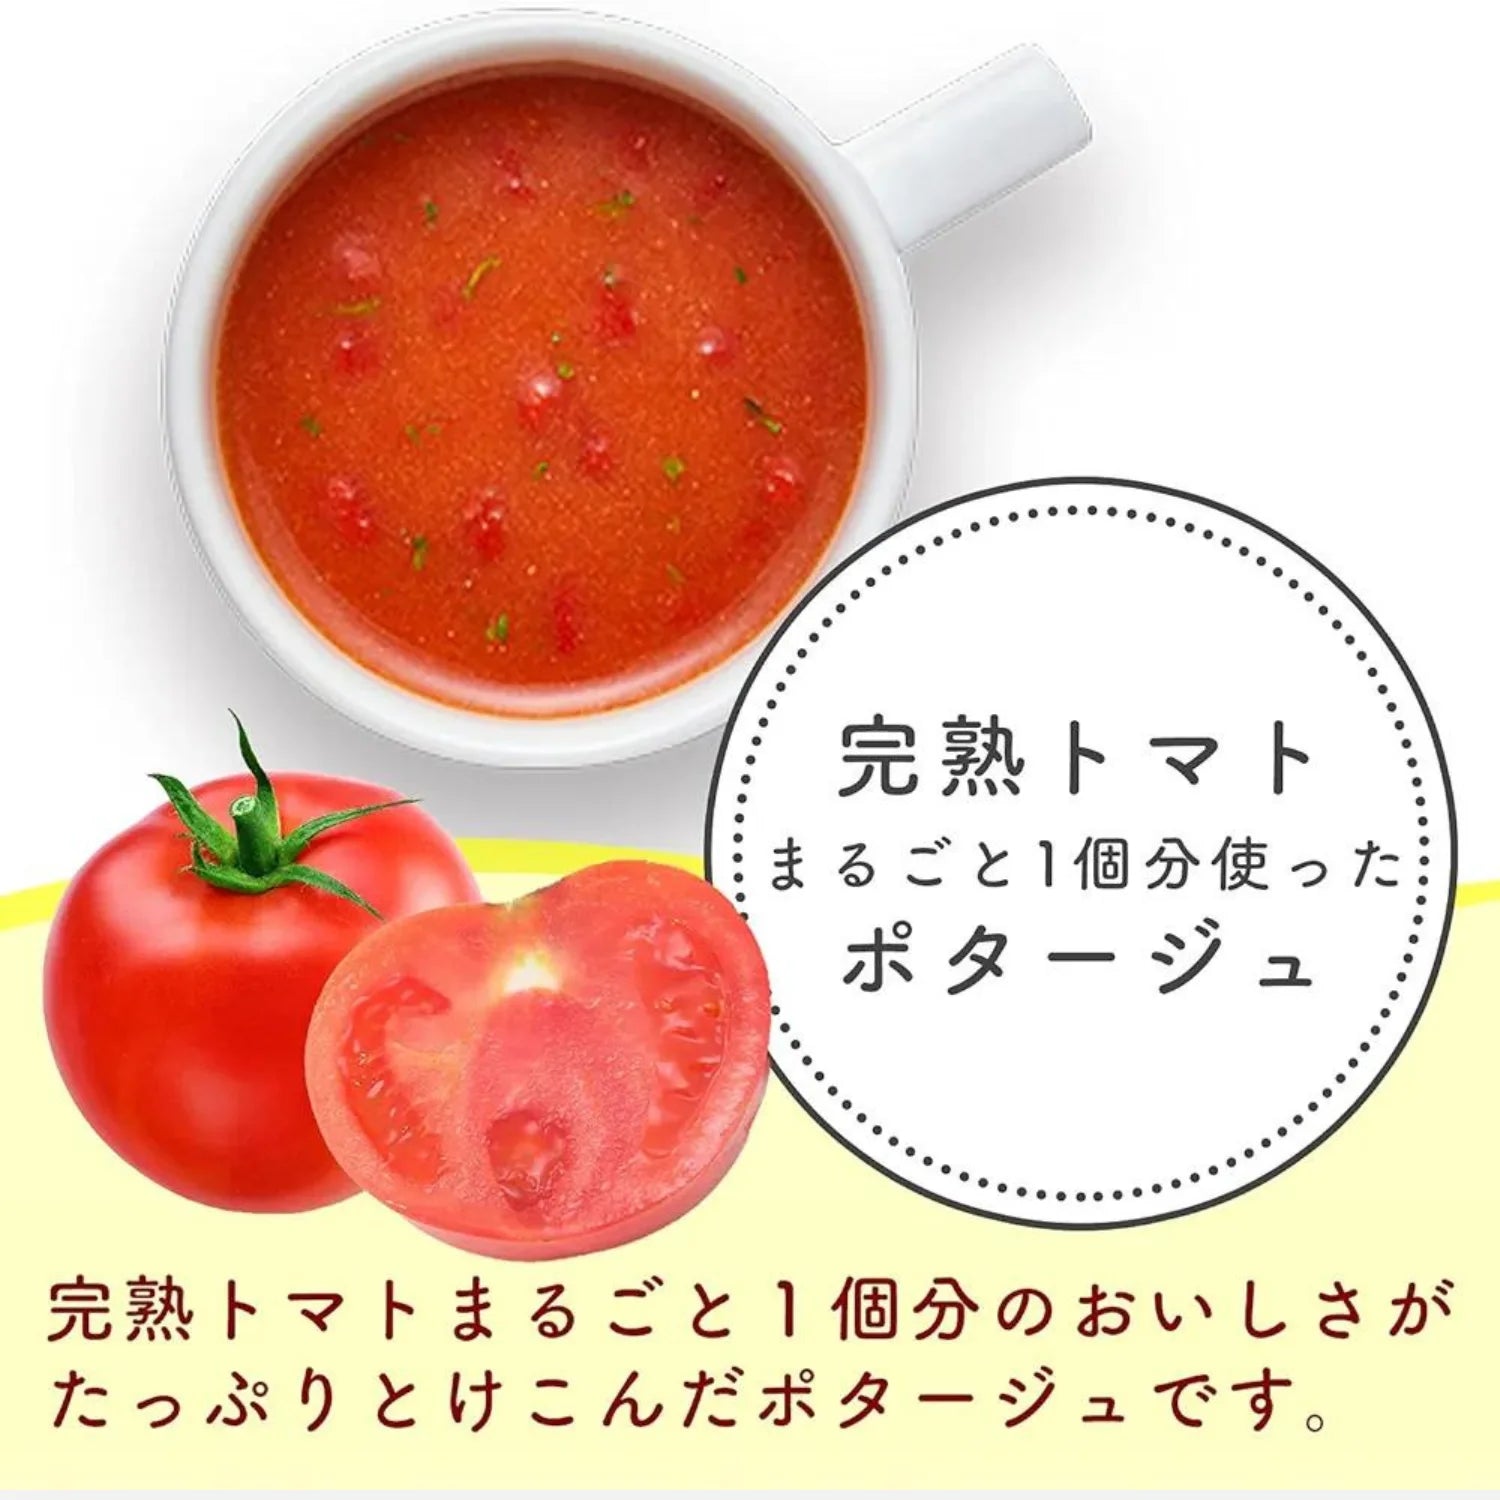 Ajinomoto Cup Soup Creamy Tomato (Pack of 3) - Buy Me Japan